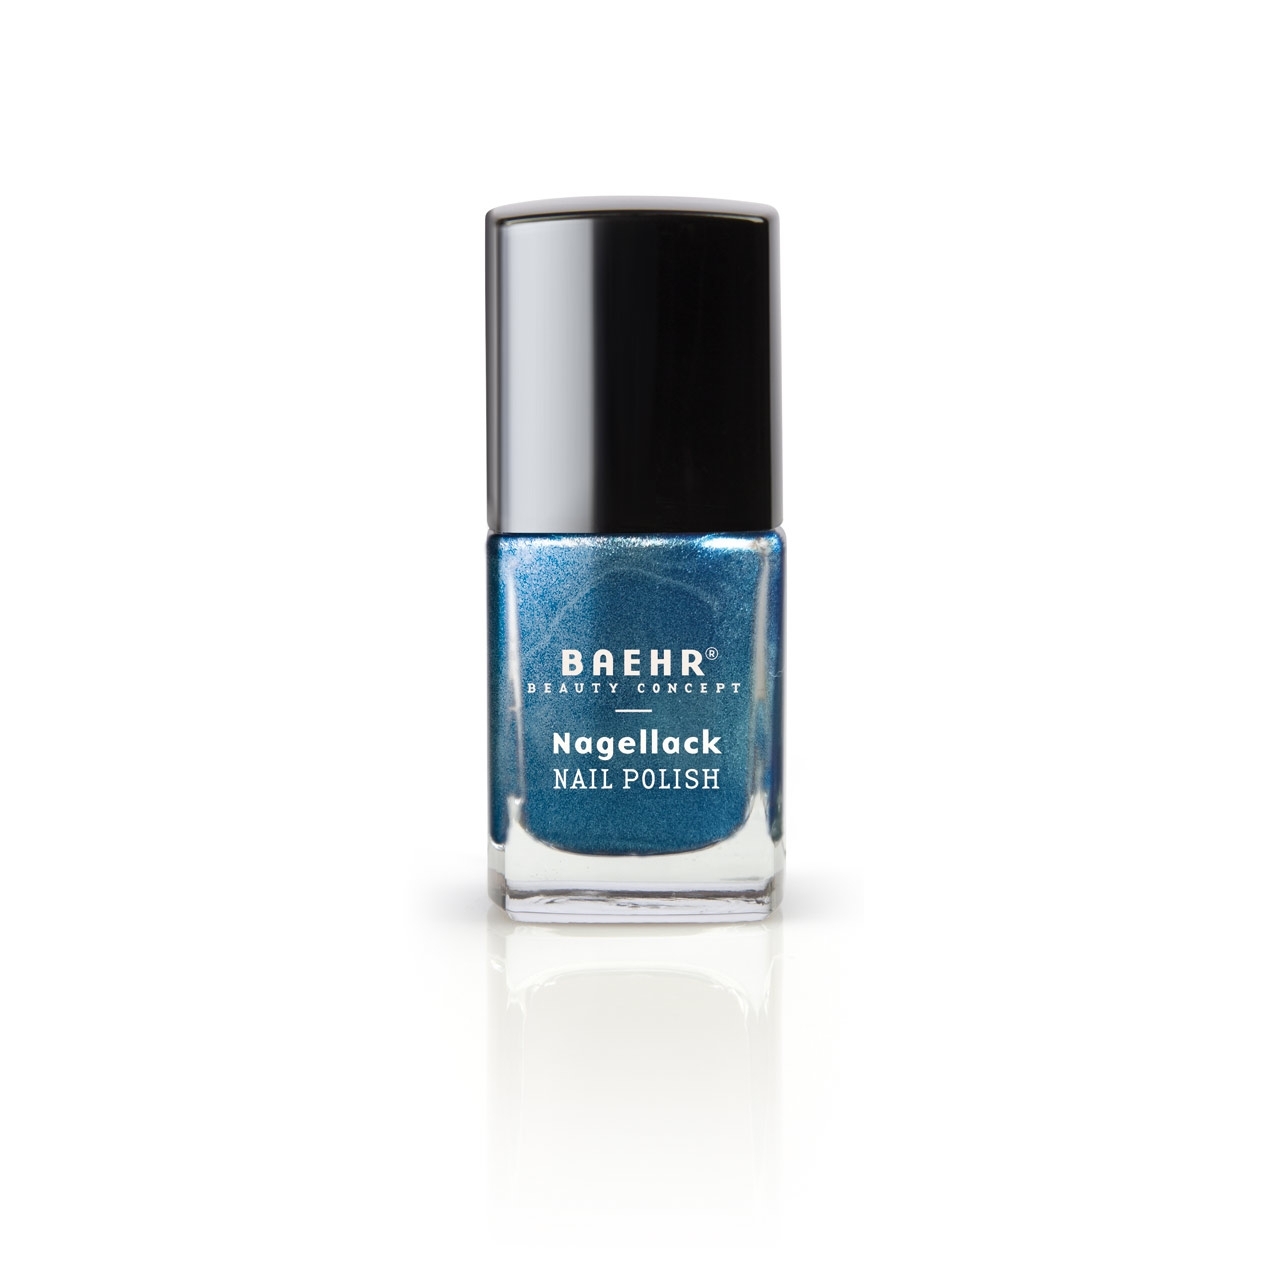 BAEHR BEAUTY CONCEPT - NAILS Nagellack blue metallic 11 ml